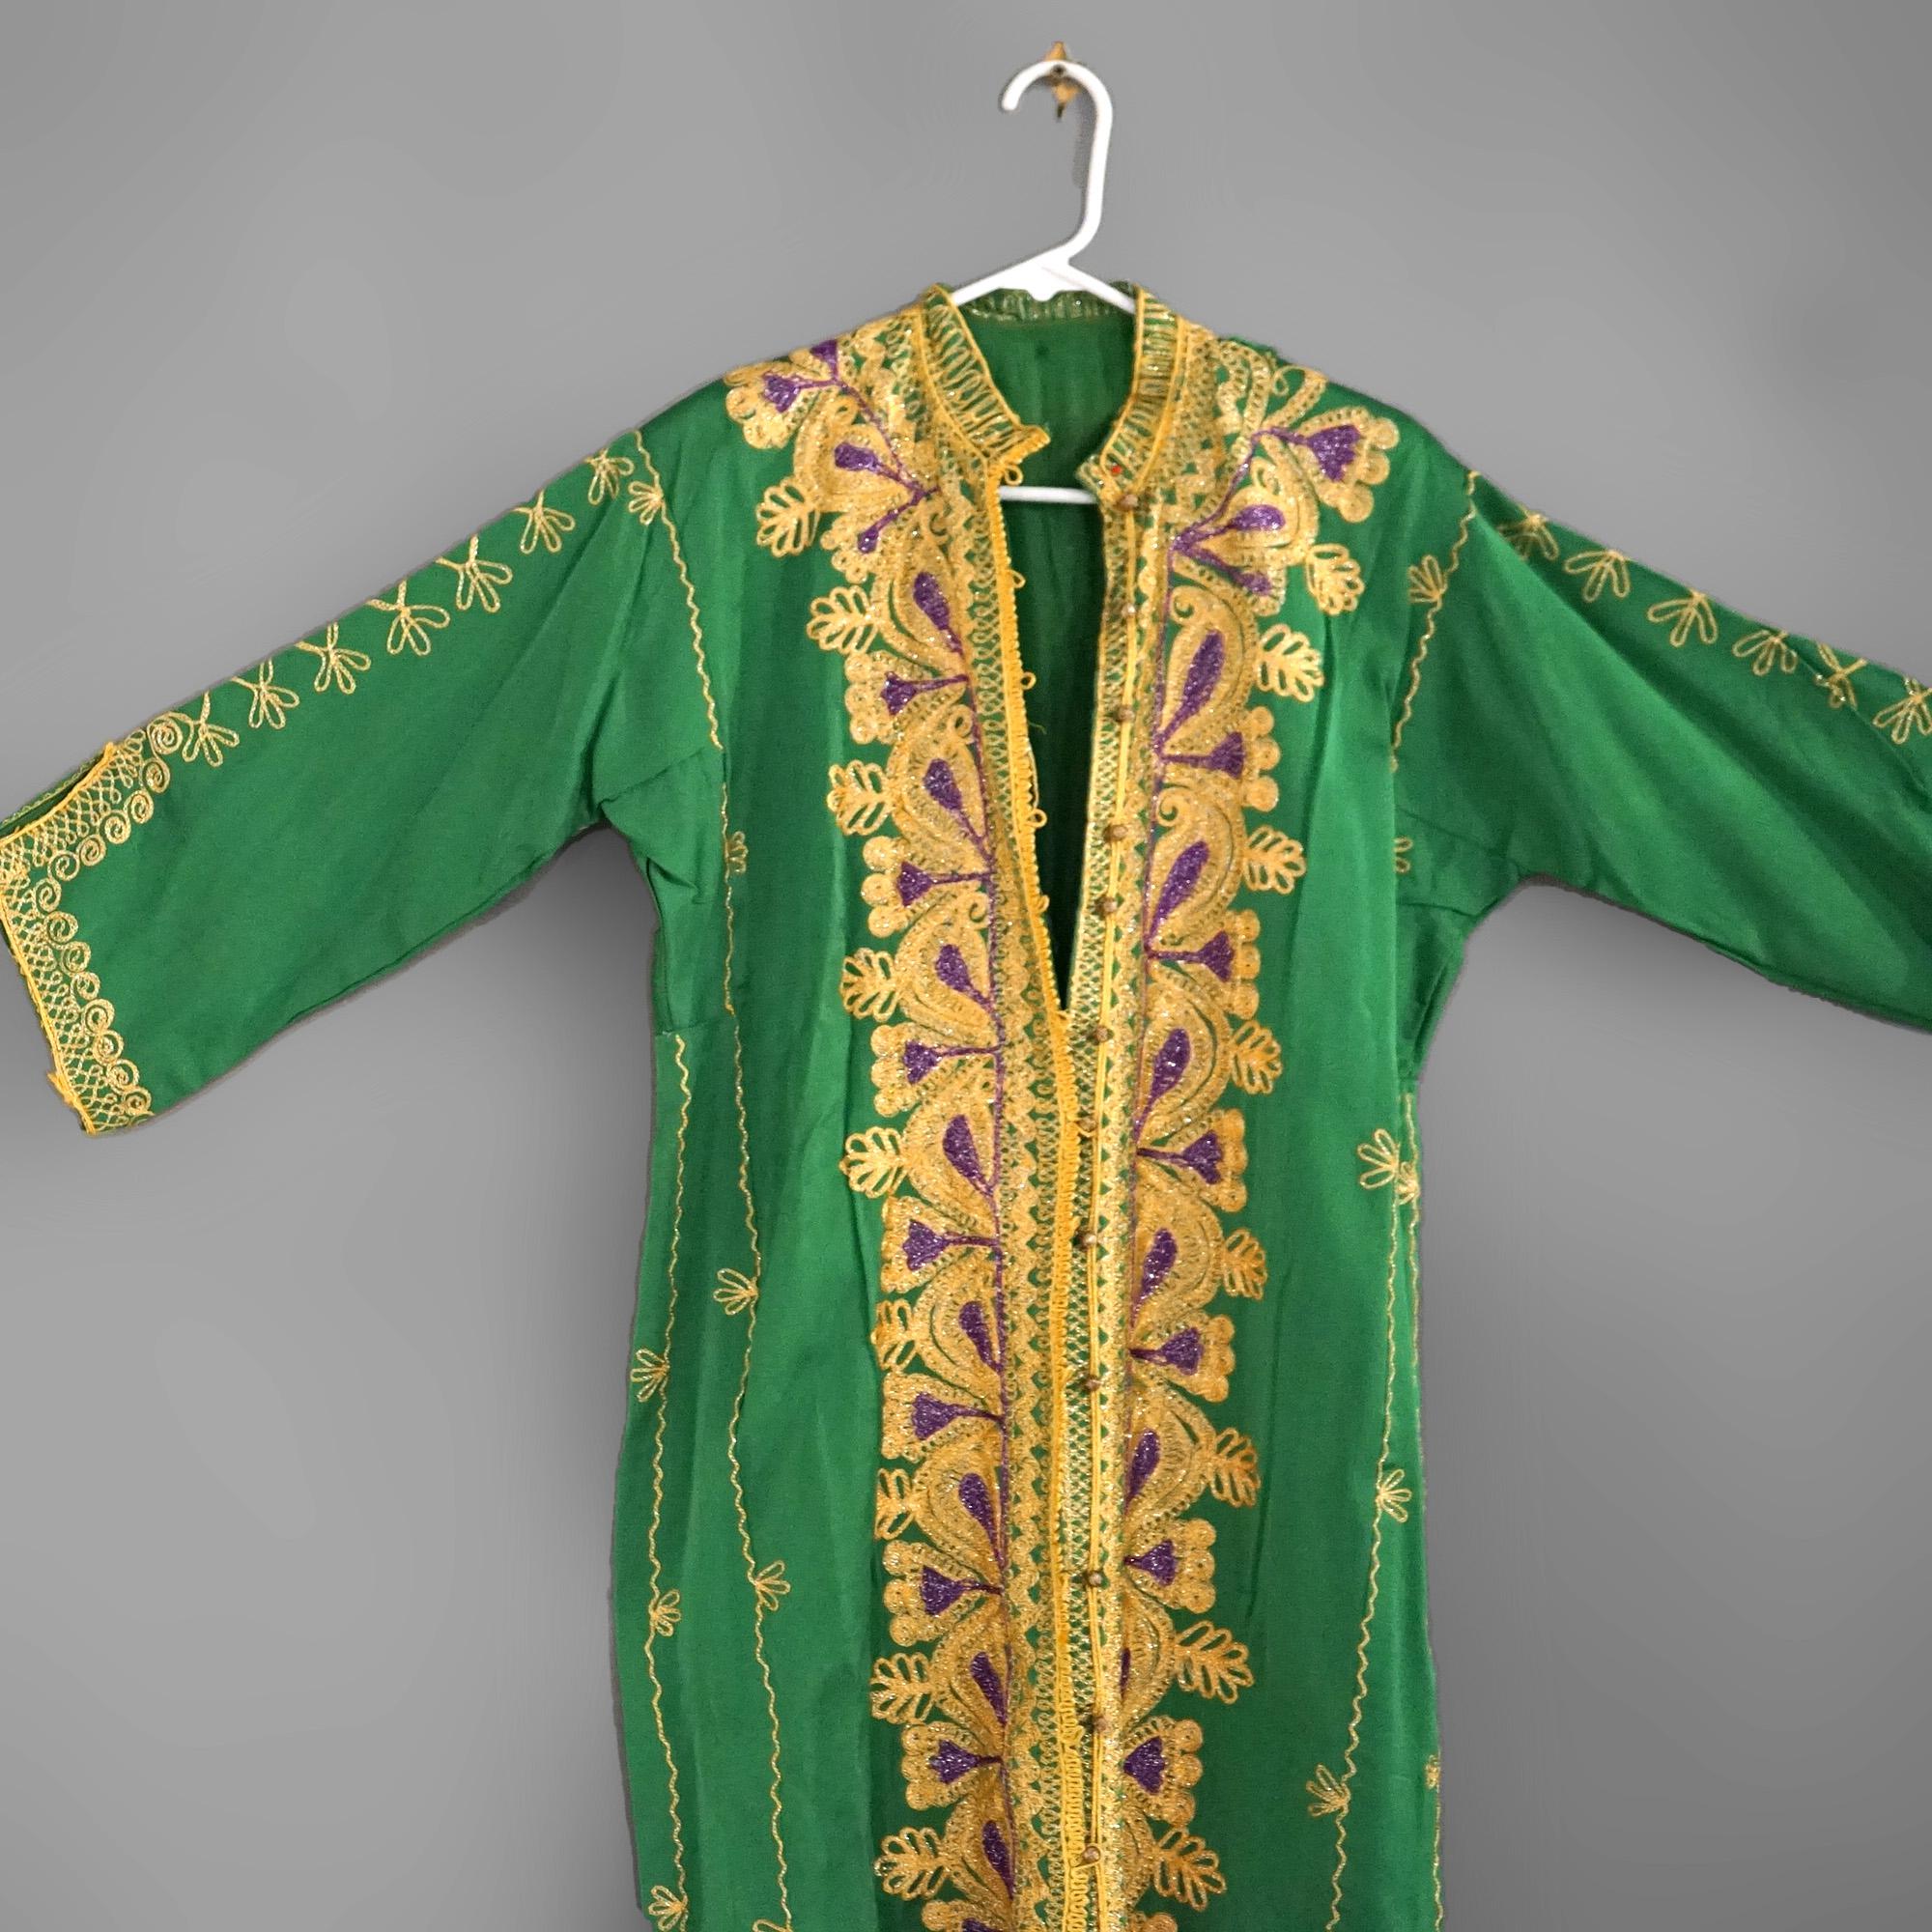 Vintage Moroccan Silk & Gold Metallic Needlework Robe 20th C

Measures- 58''H x 17.5''W x 2''D; 17.5'' Across the shoulders